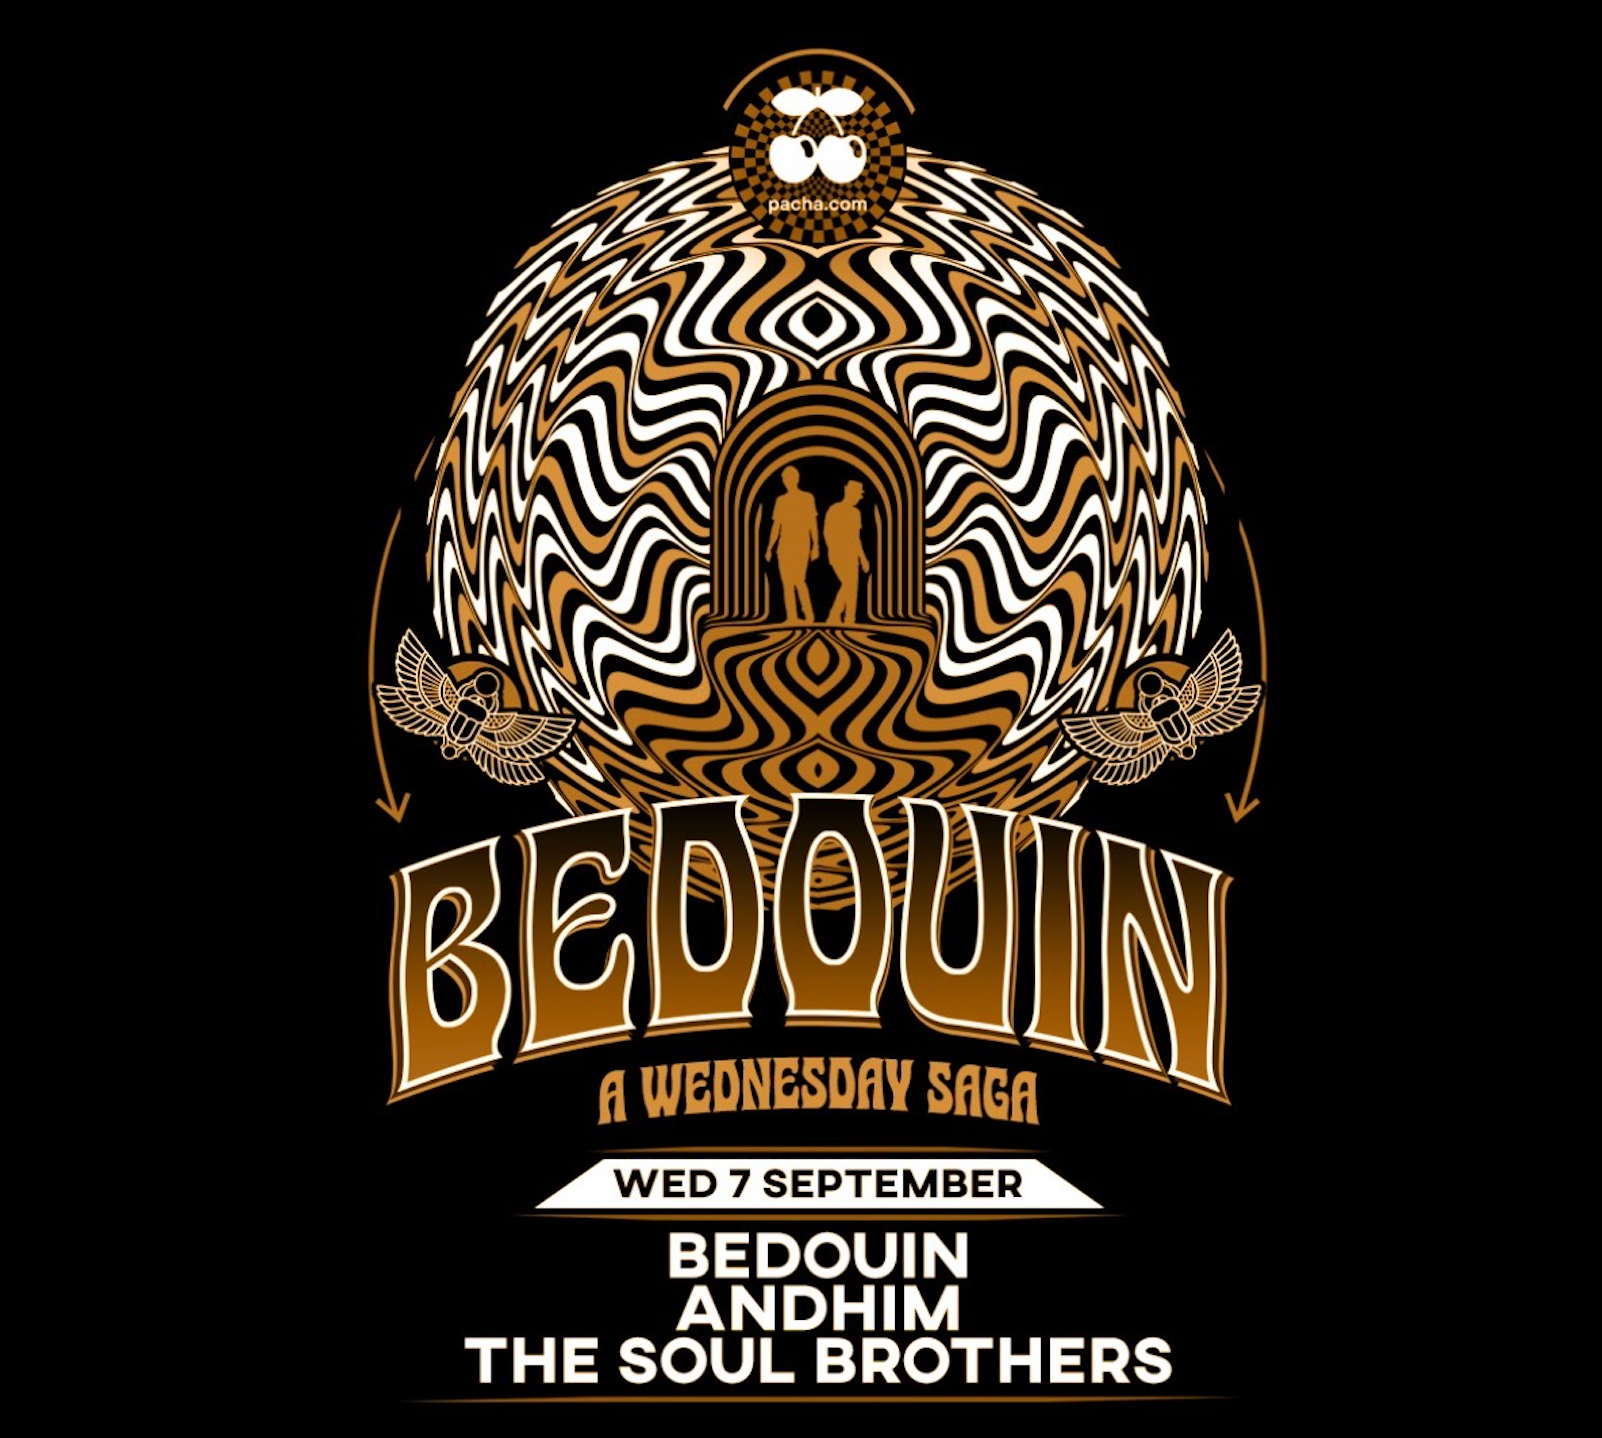 Bedouin: A Wednesday Saga event artwork